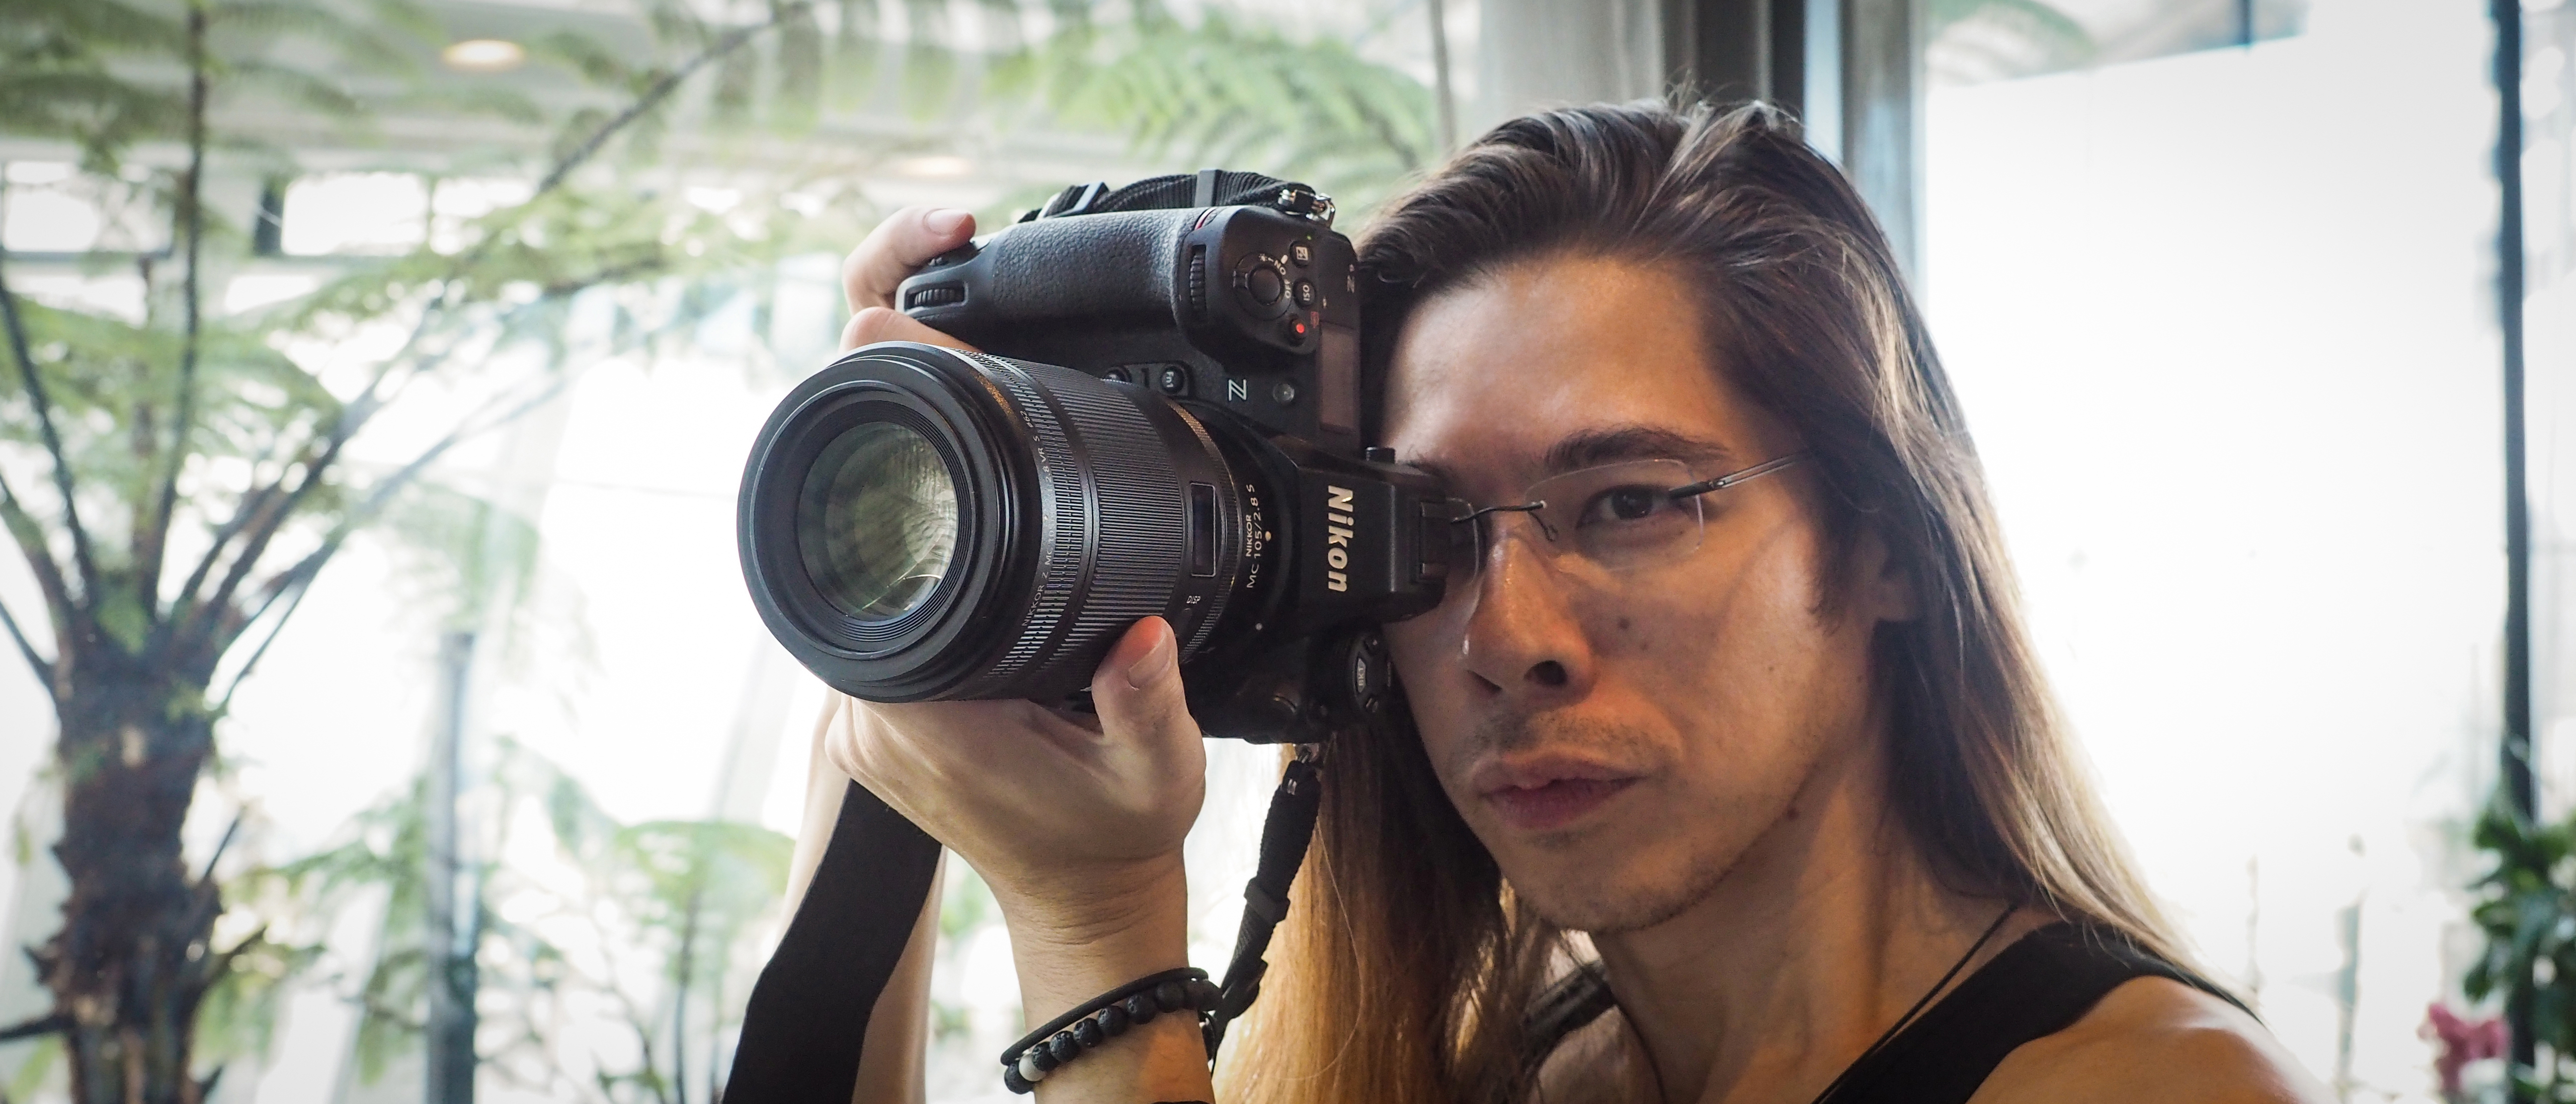 Nikon Z 9 Camera Review